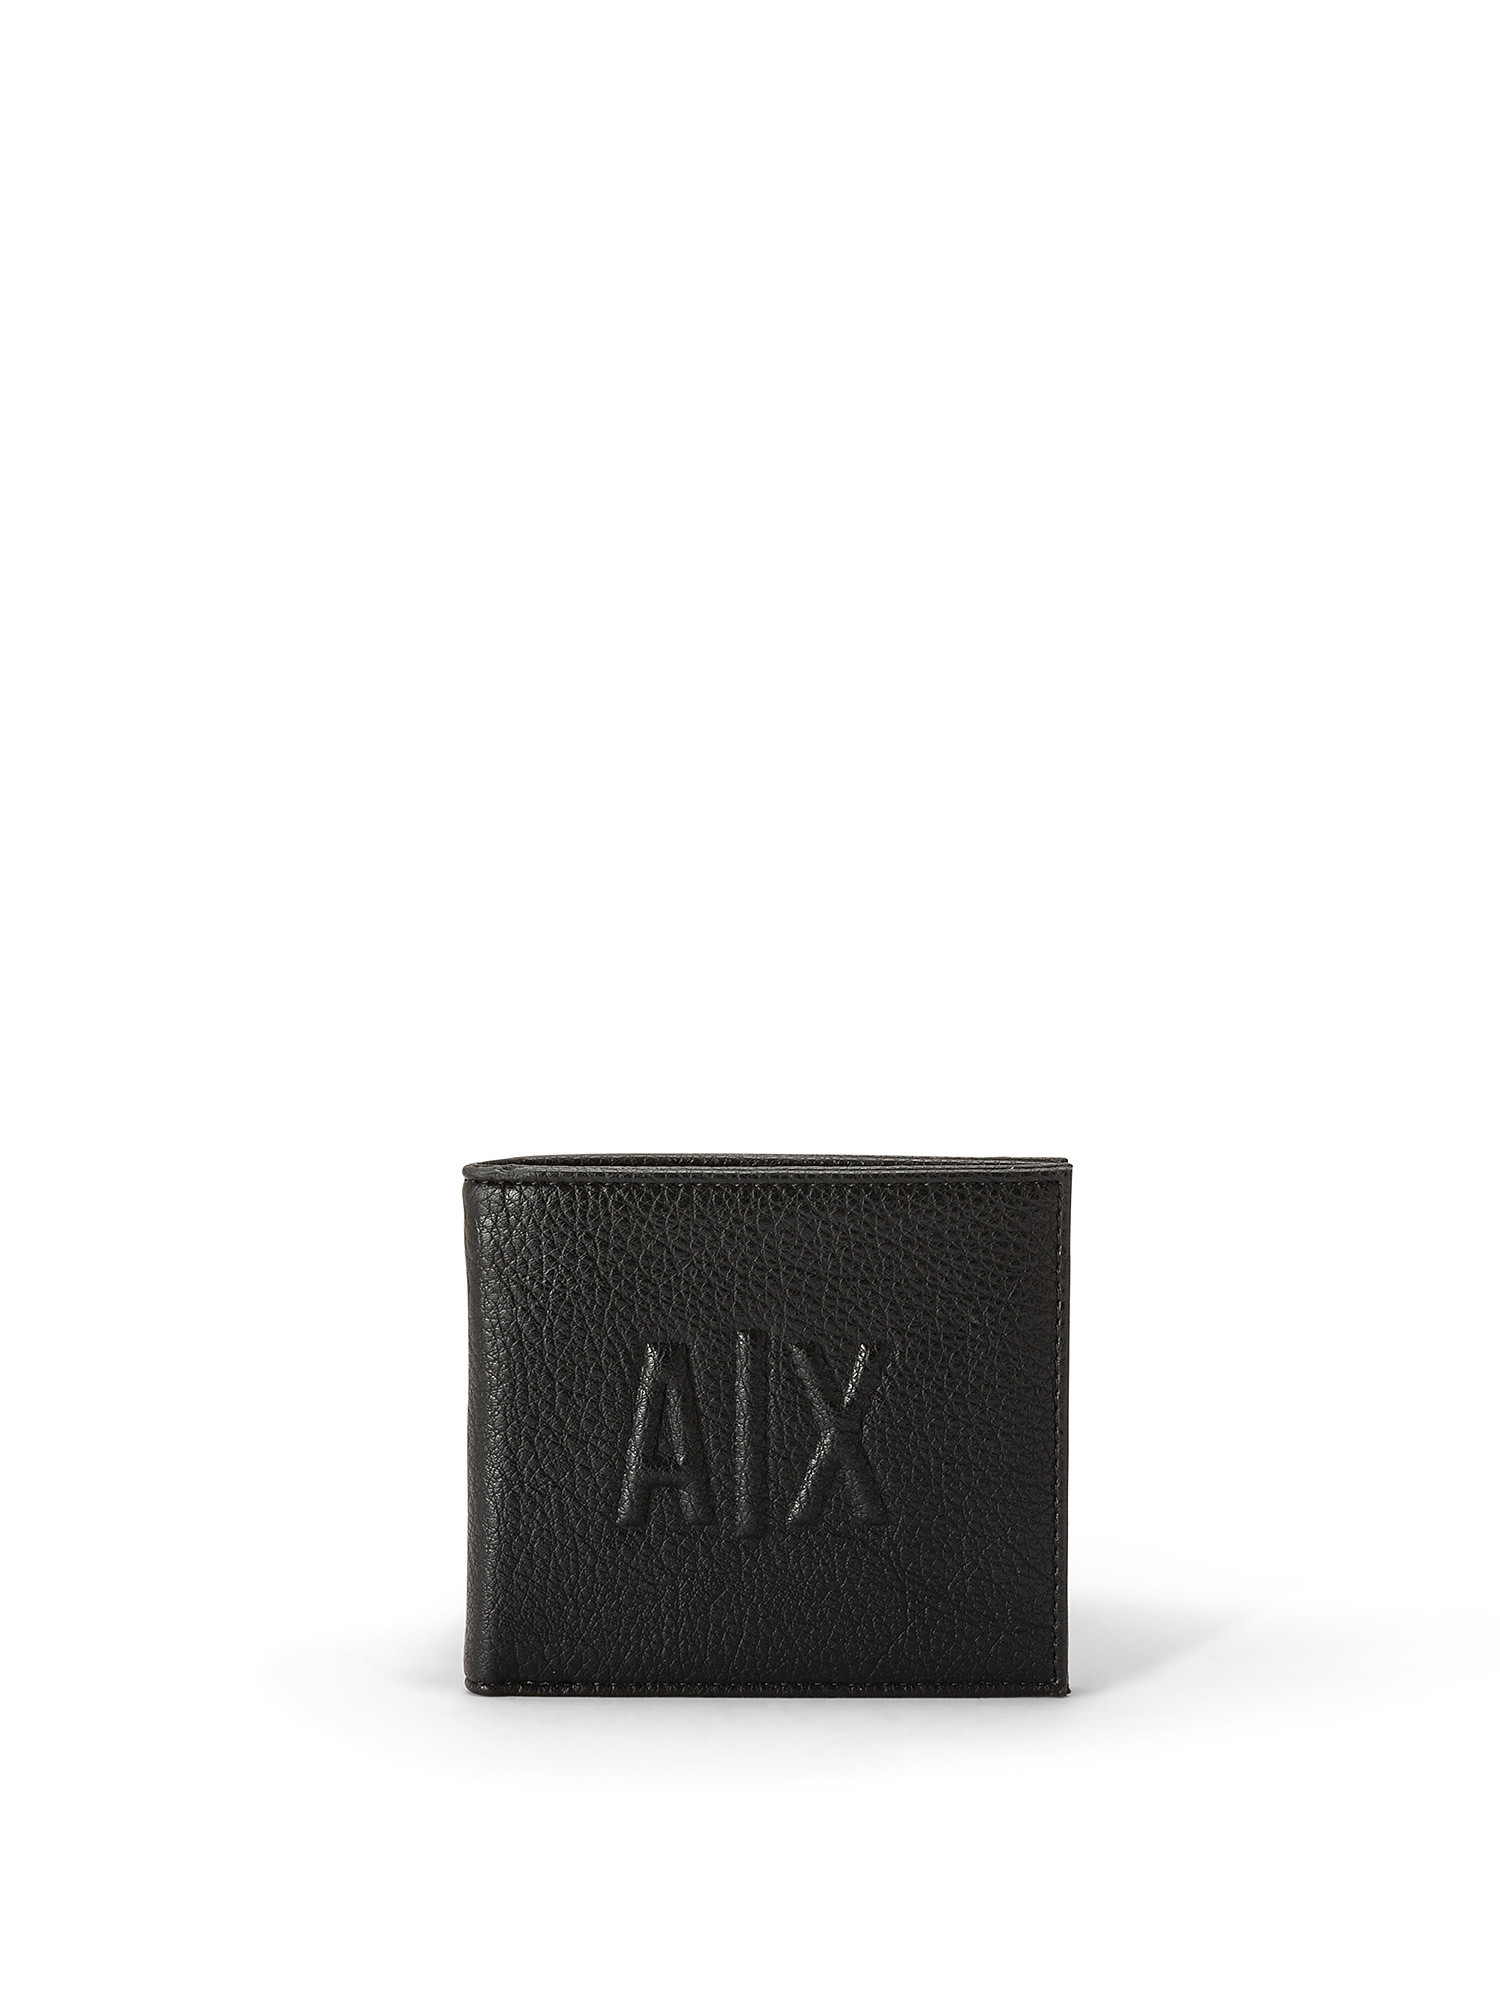 Armani Exchange - Wallet with logo, Black, large image number 0